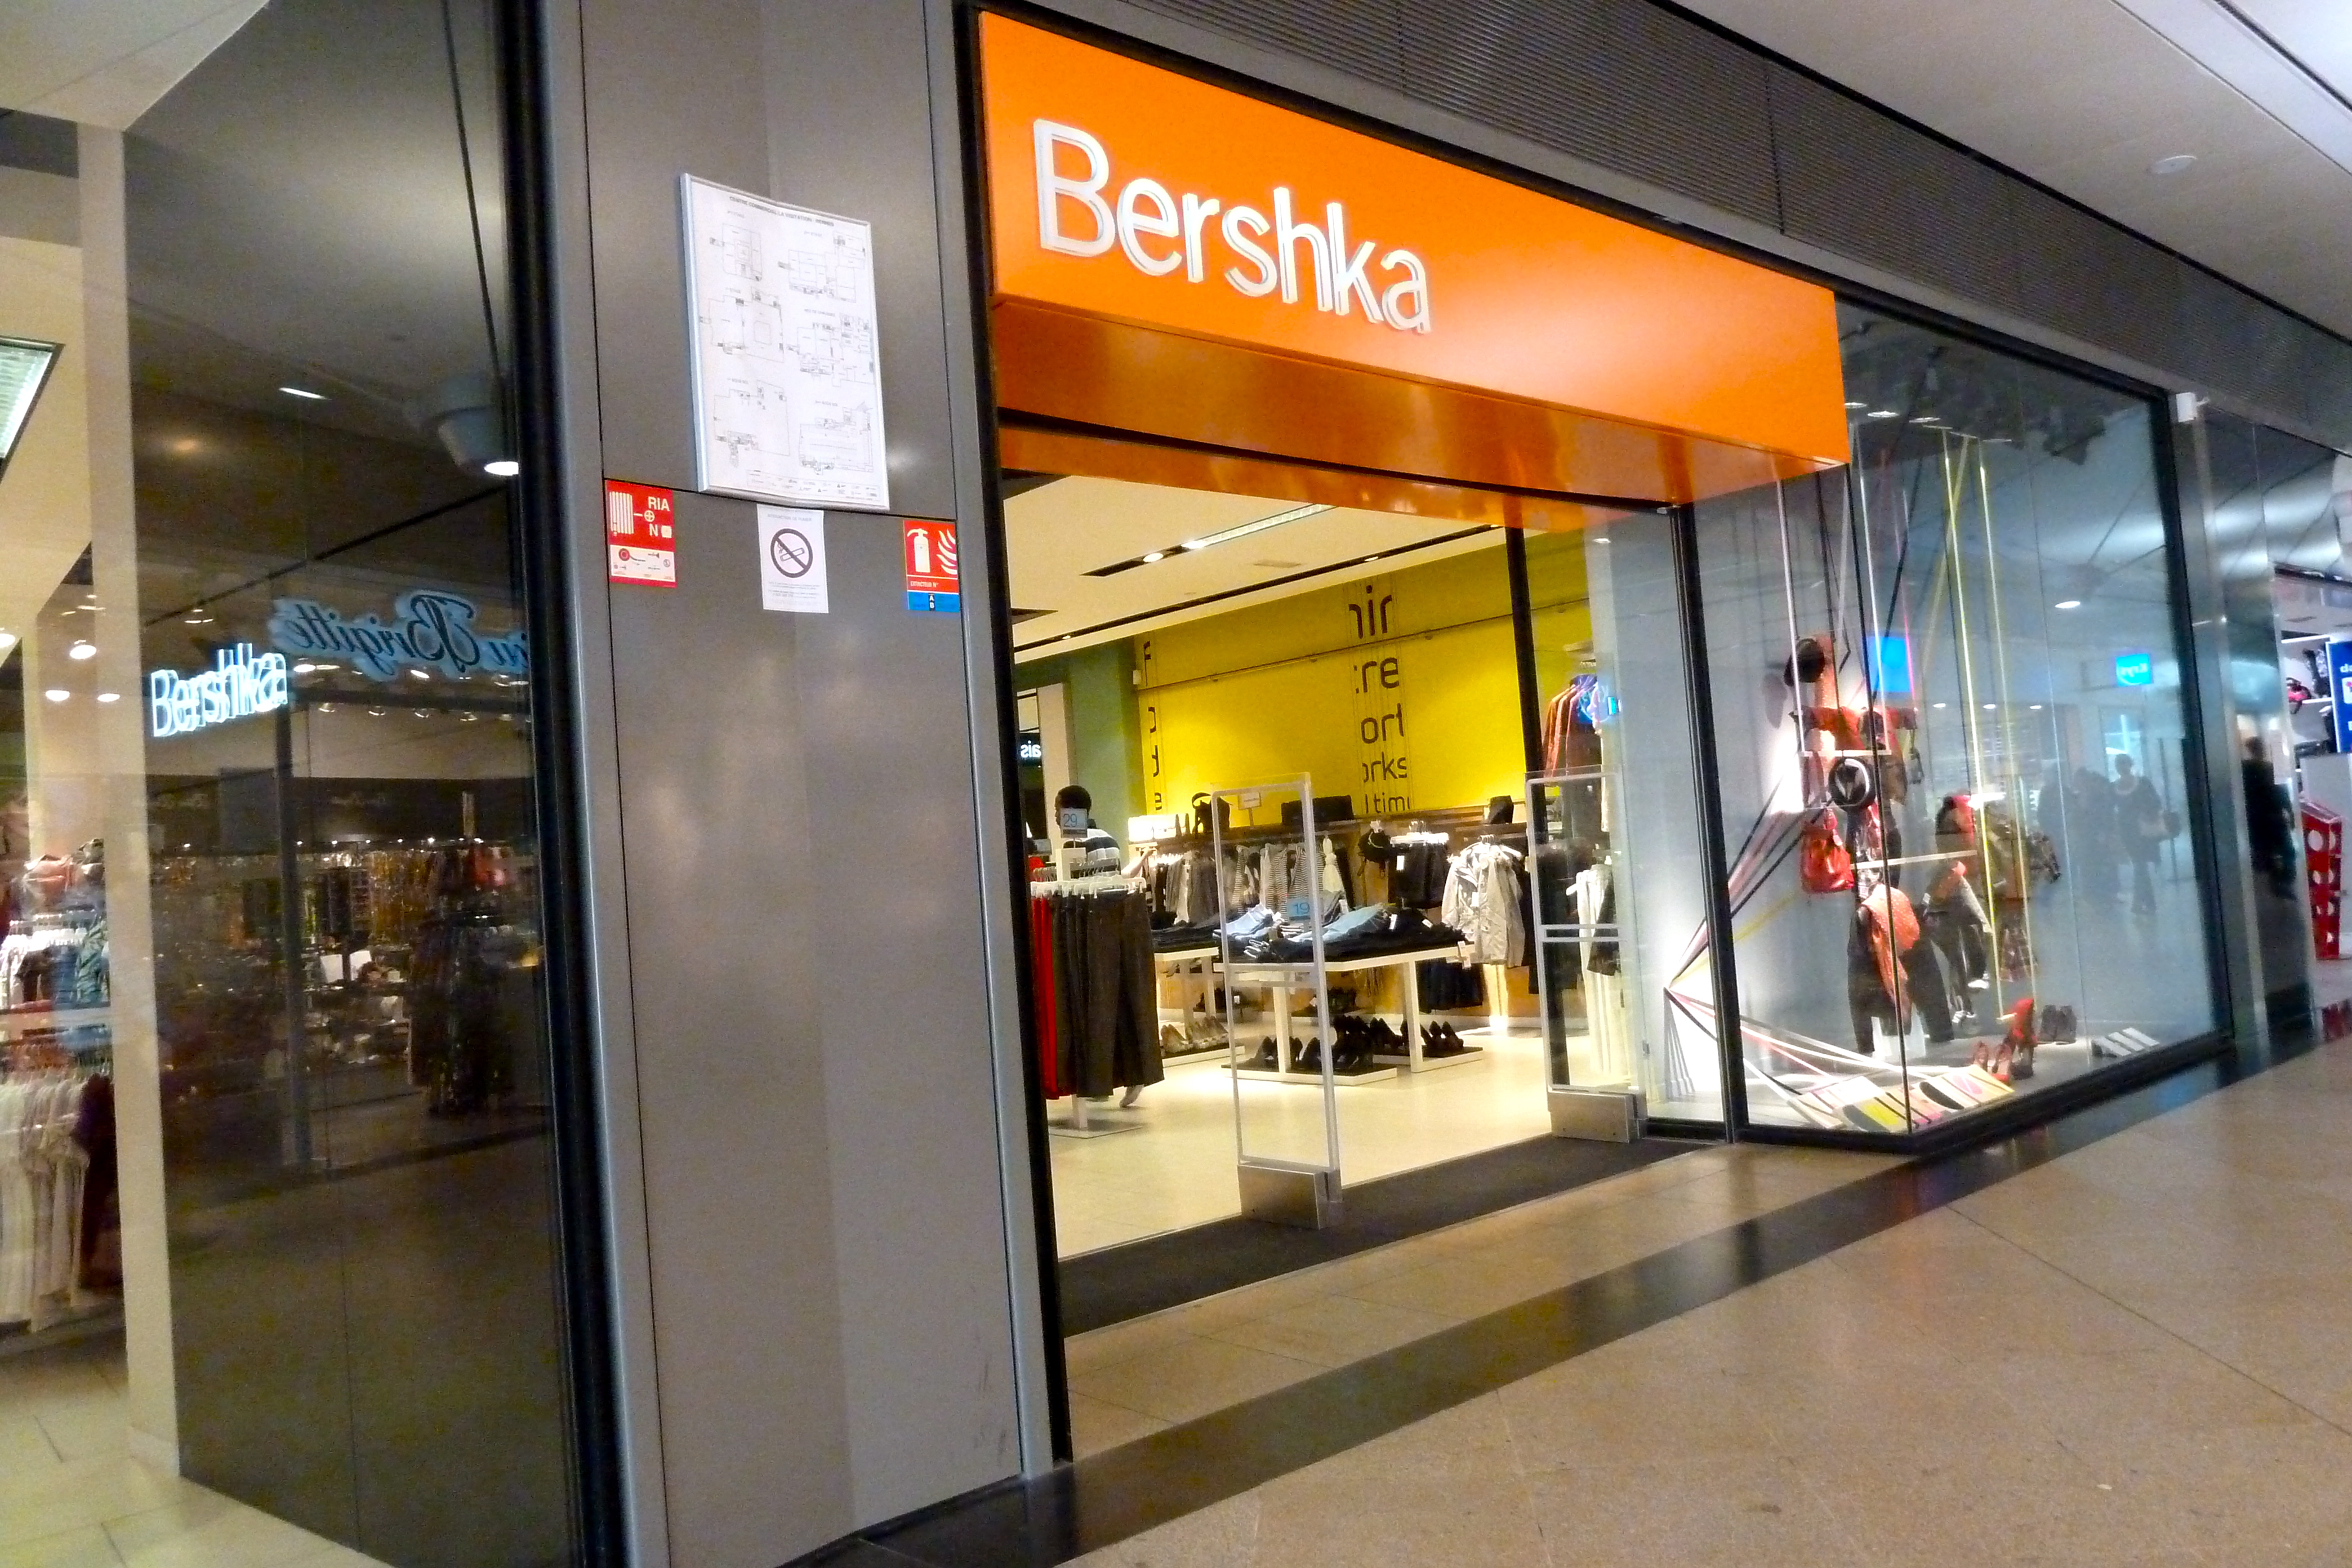 Bershka - Wikipedia, enciclopedia libre